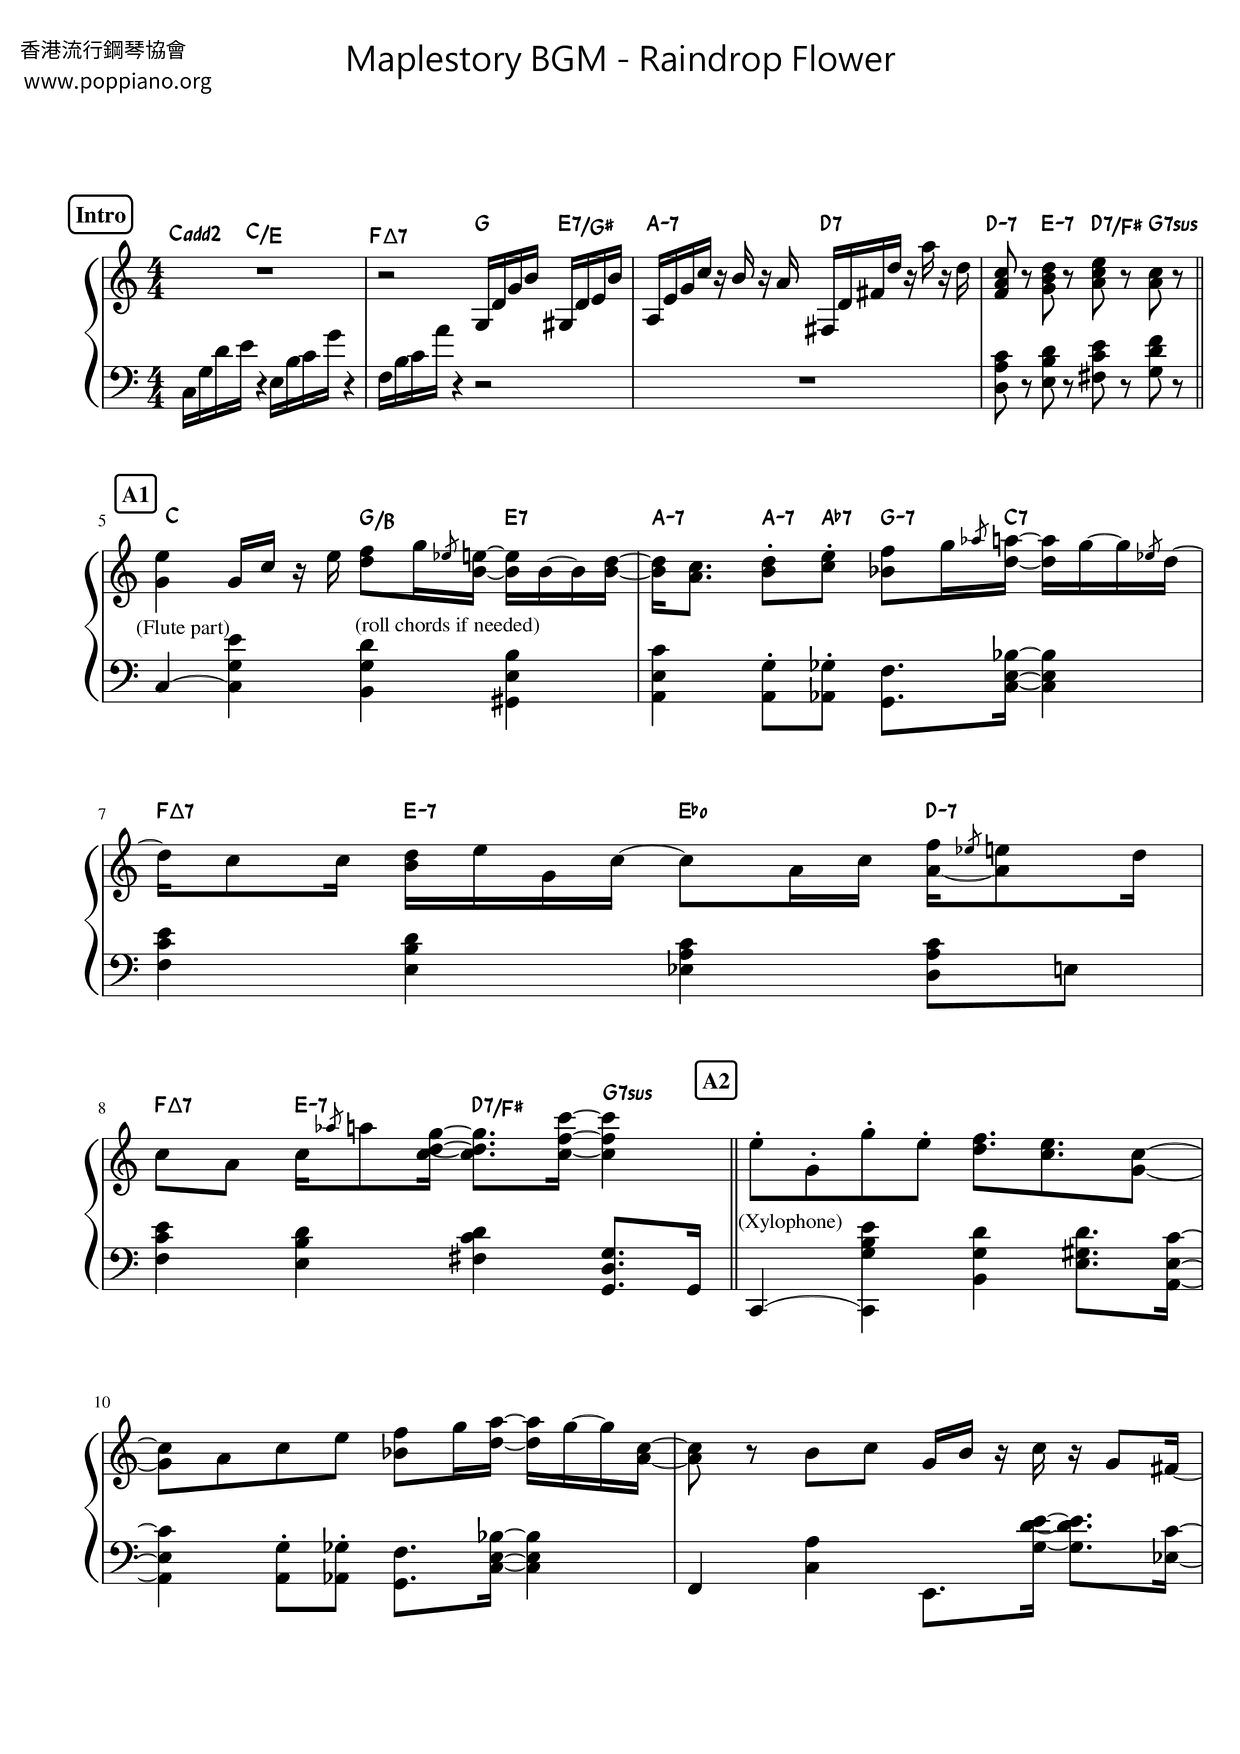 Maplestory BGM Raindrop Flower Sheet Music / Piano Score Free PDF